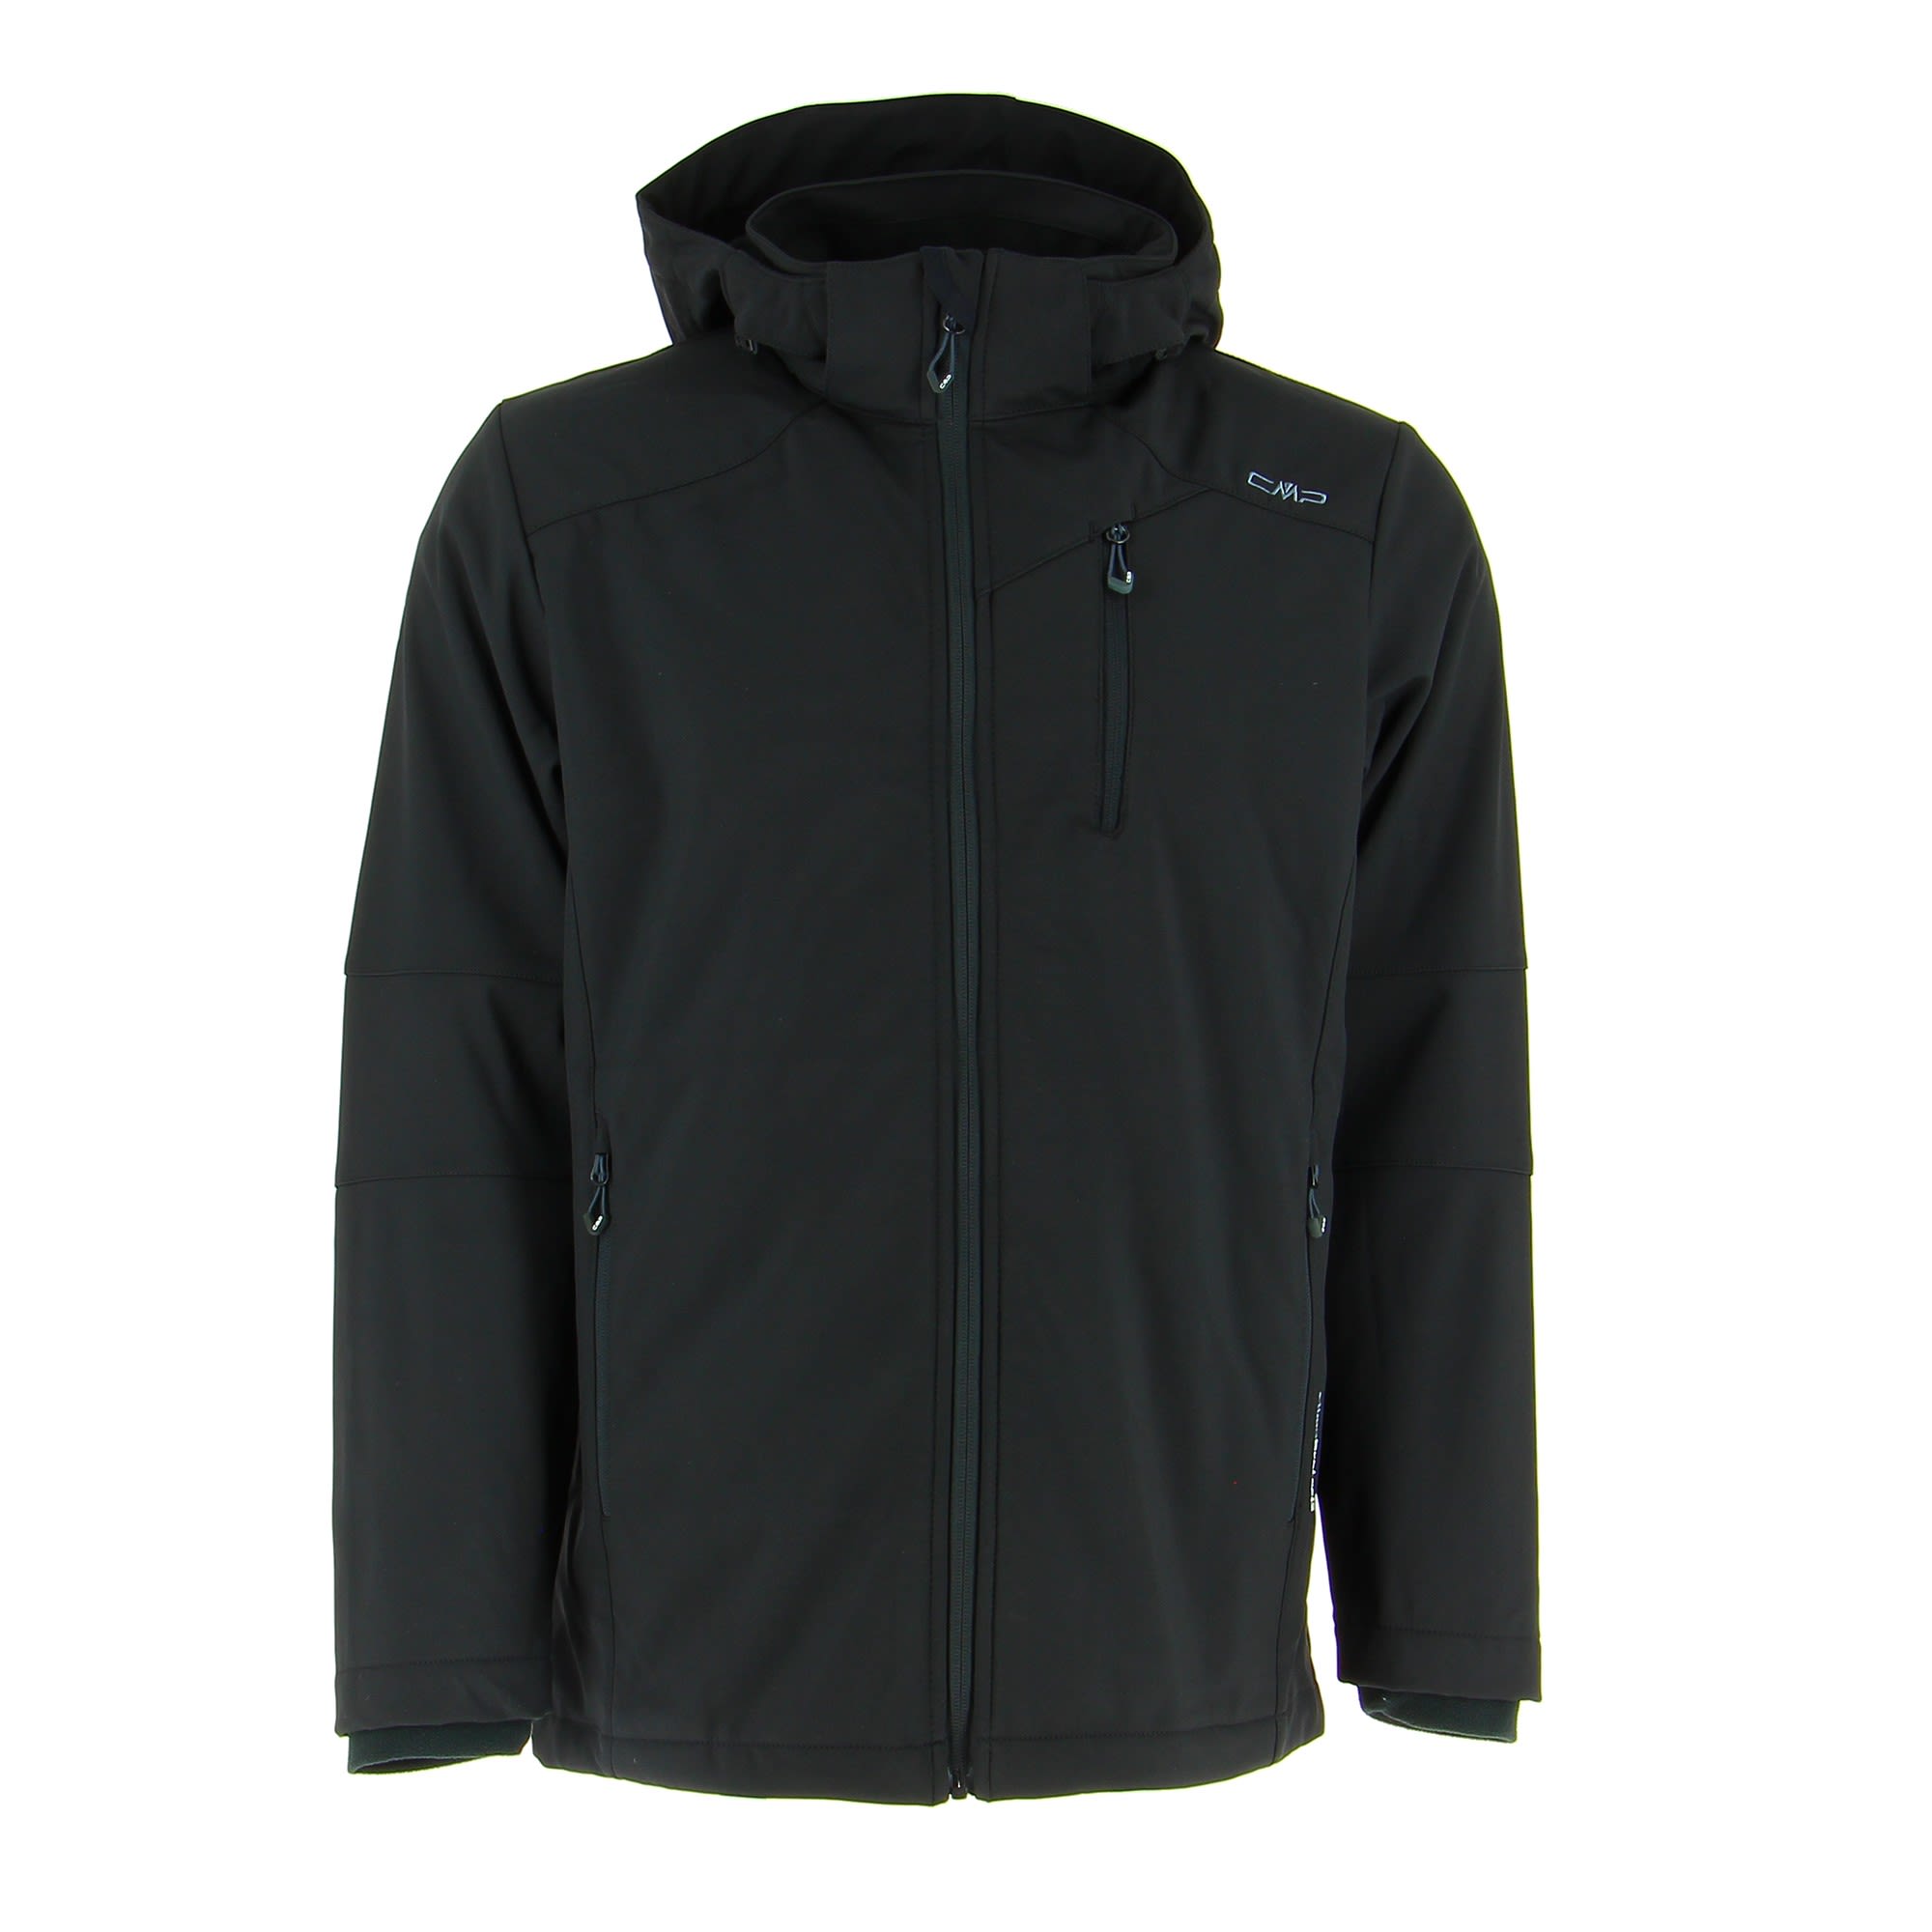 CMP Jacket Zip Hood Softshell Comfort FIt Long Male Softshelljacken- Grsse 54 - Farbe Nero unter CMP